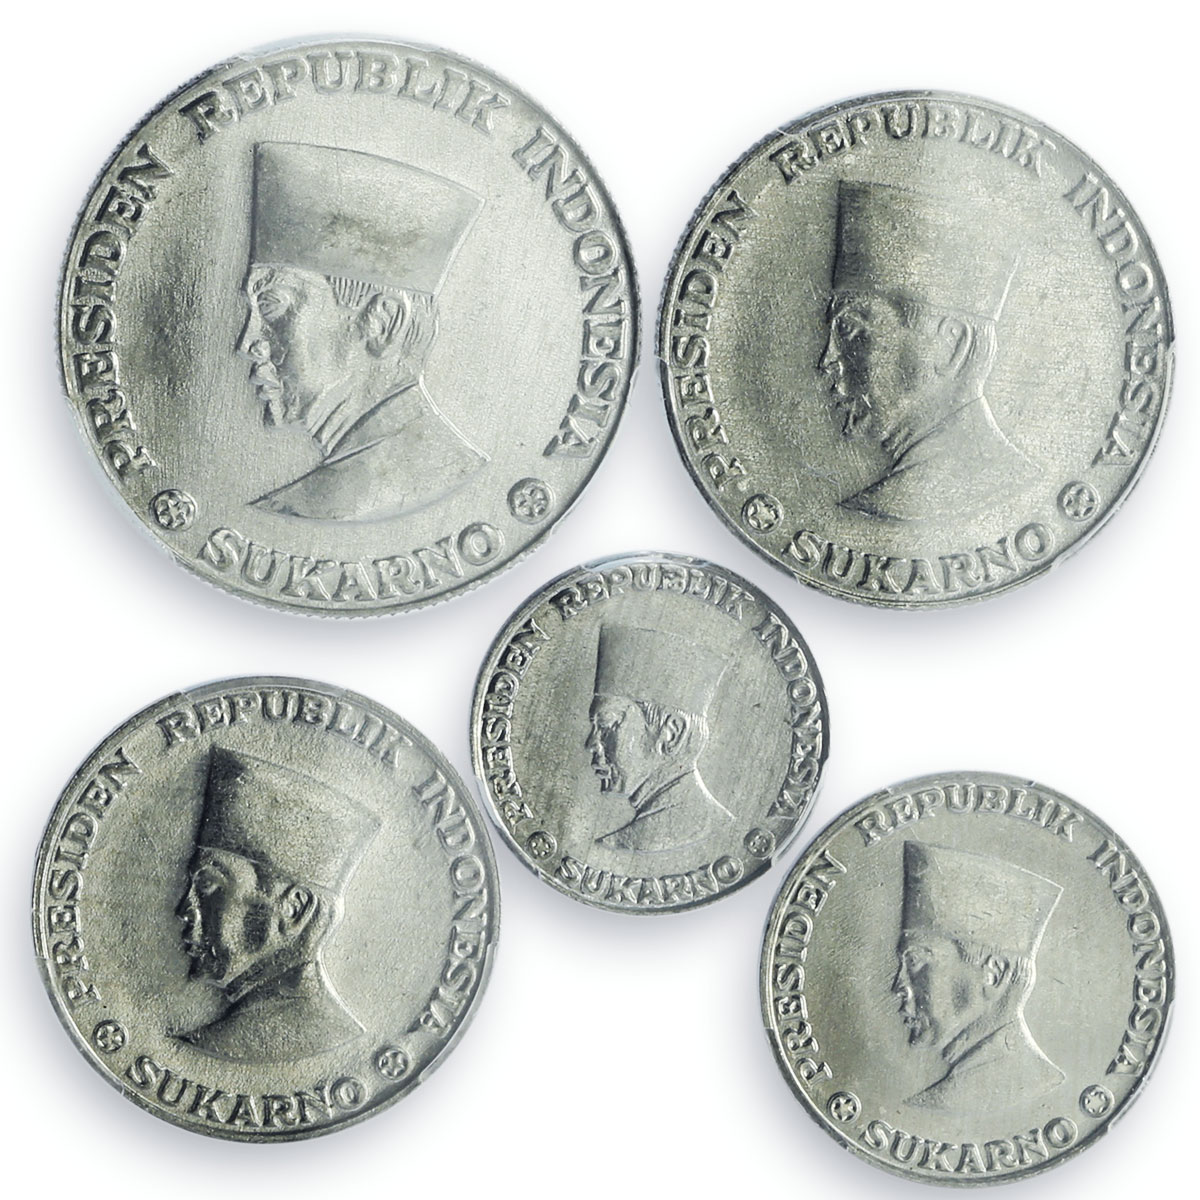 Indonesia Irian Barat set of 5 coins Sukarno MS63 MS64 PCGS aluminum coins 1962